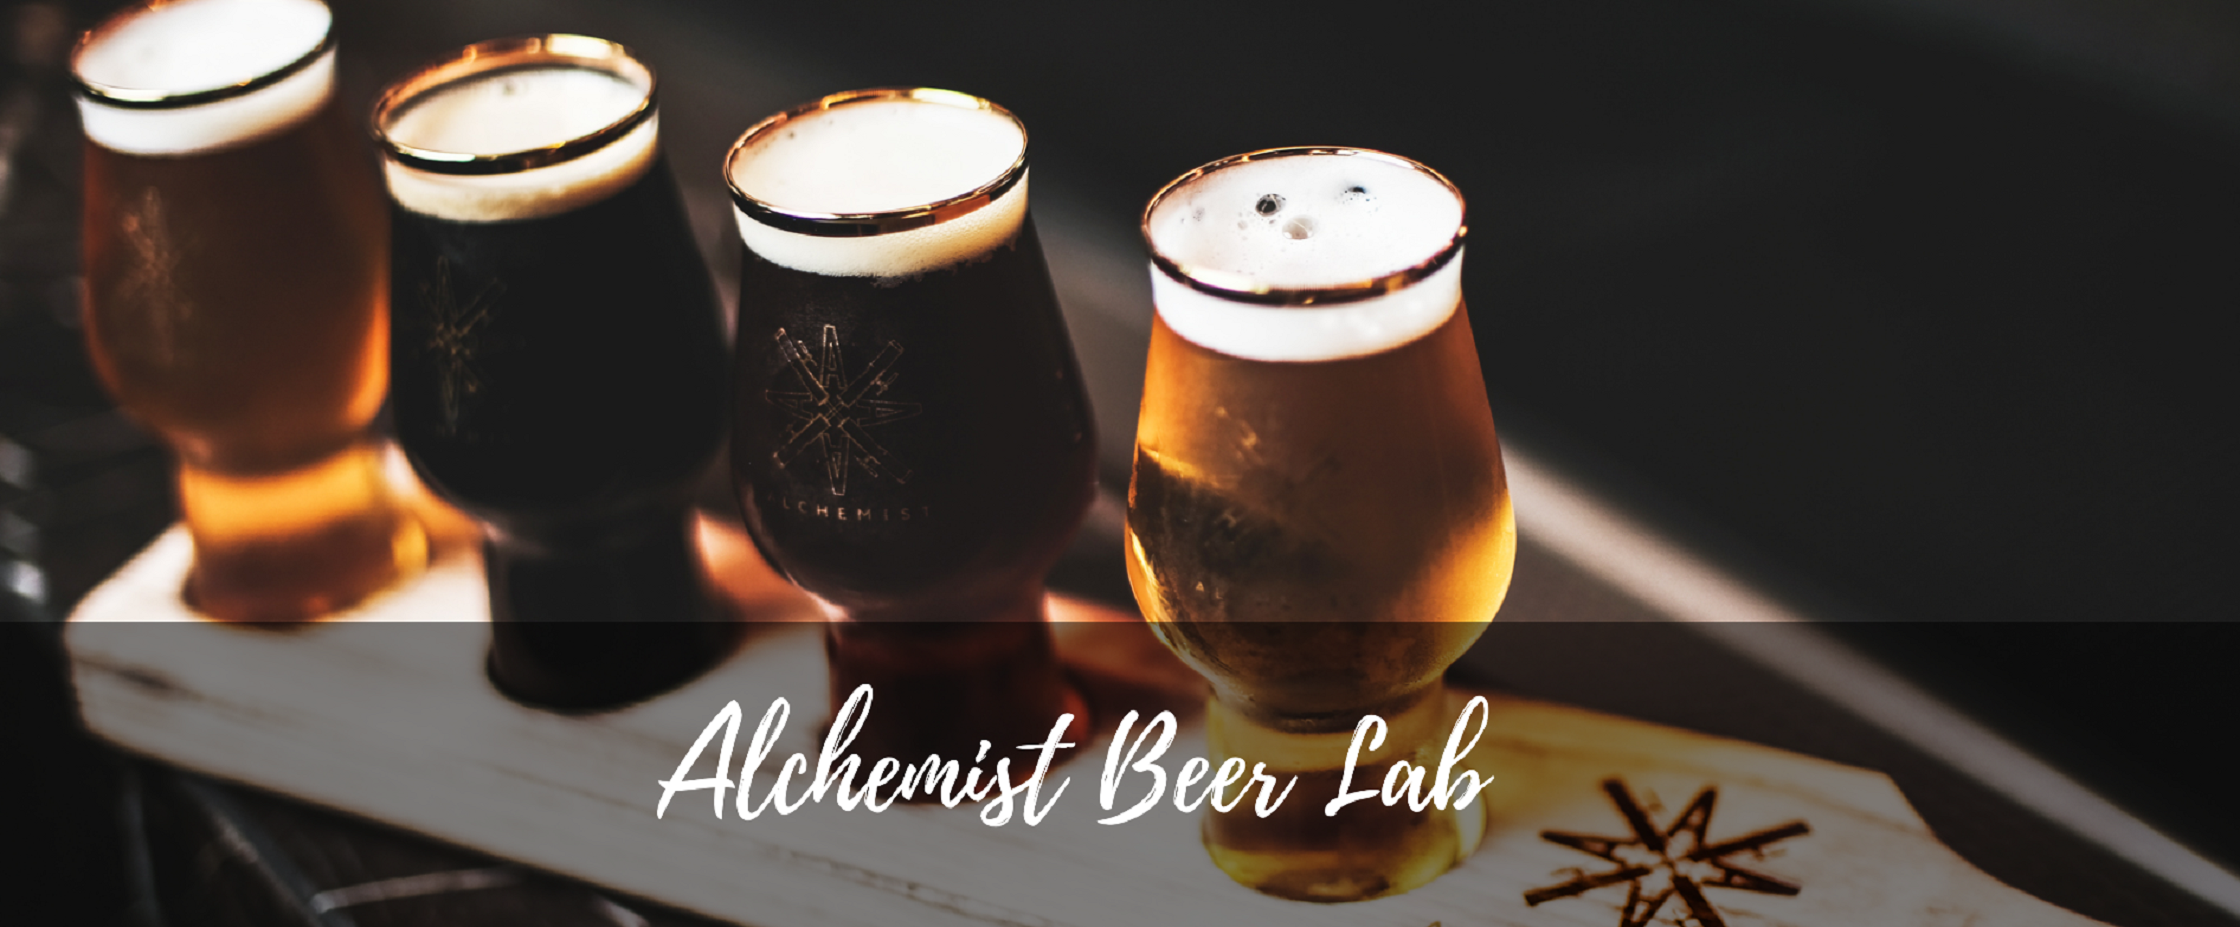 alchemist beer place